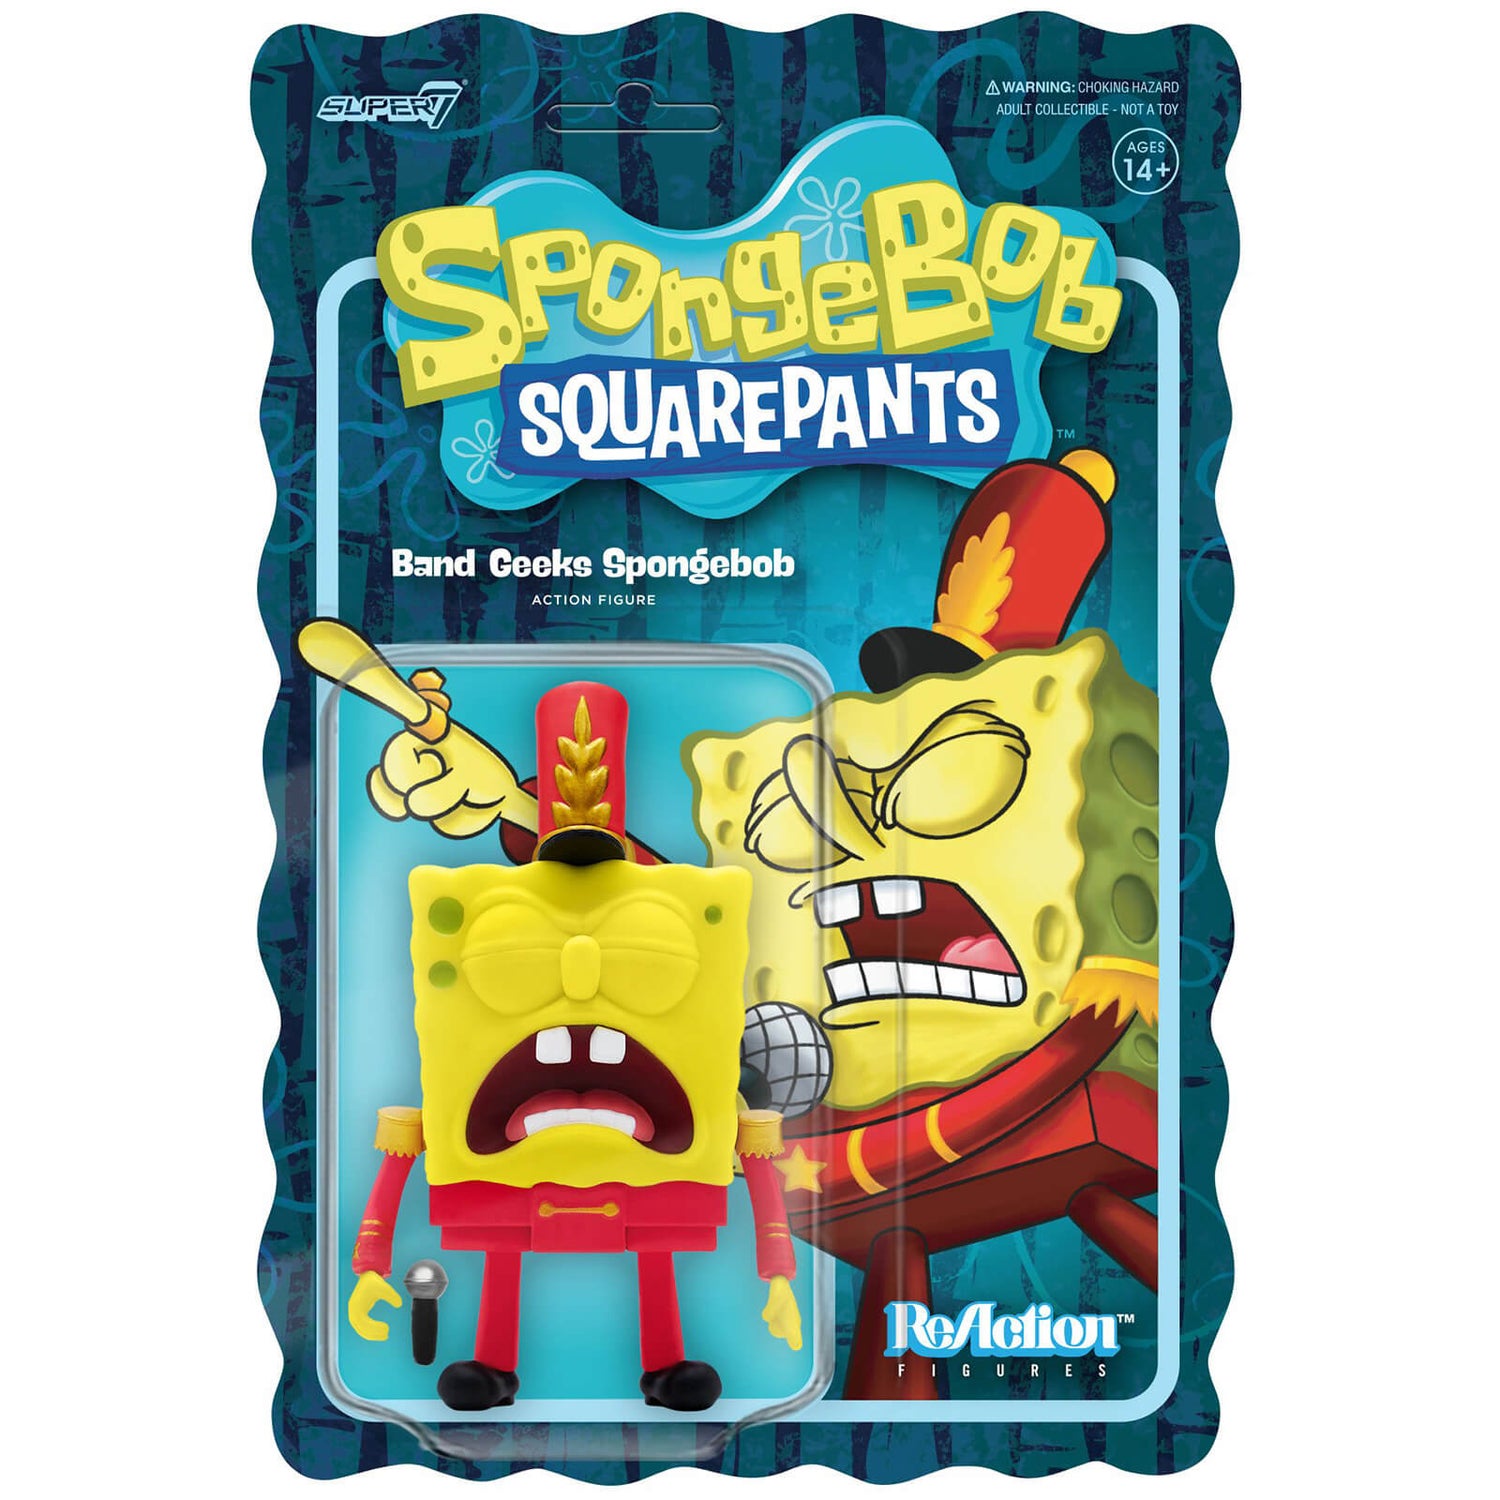 Super7 Spongebob Squarepants ReAction Figure - Band Geeks SpongeBob